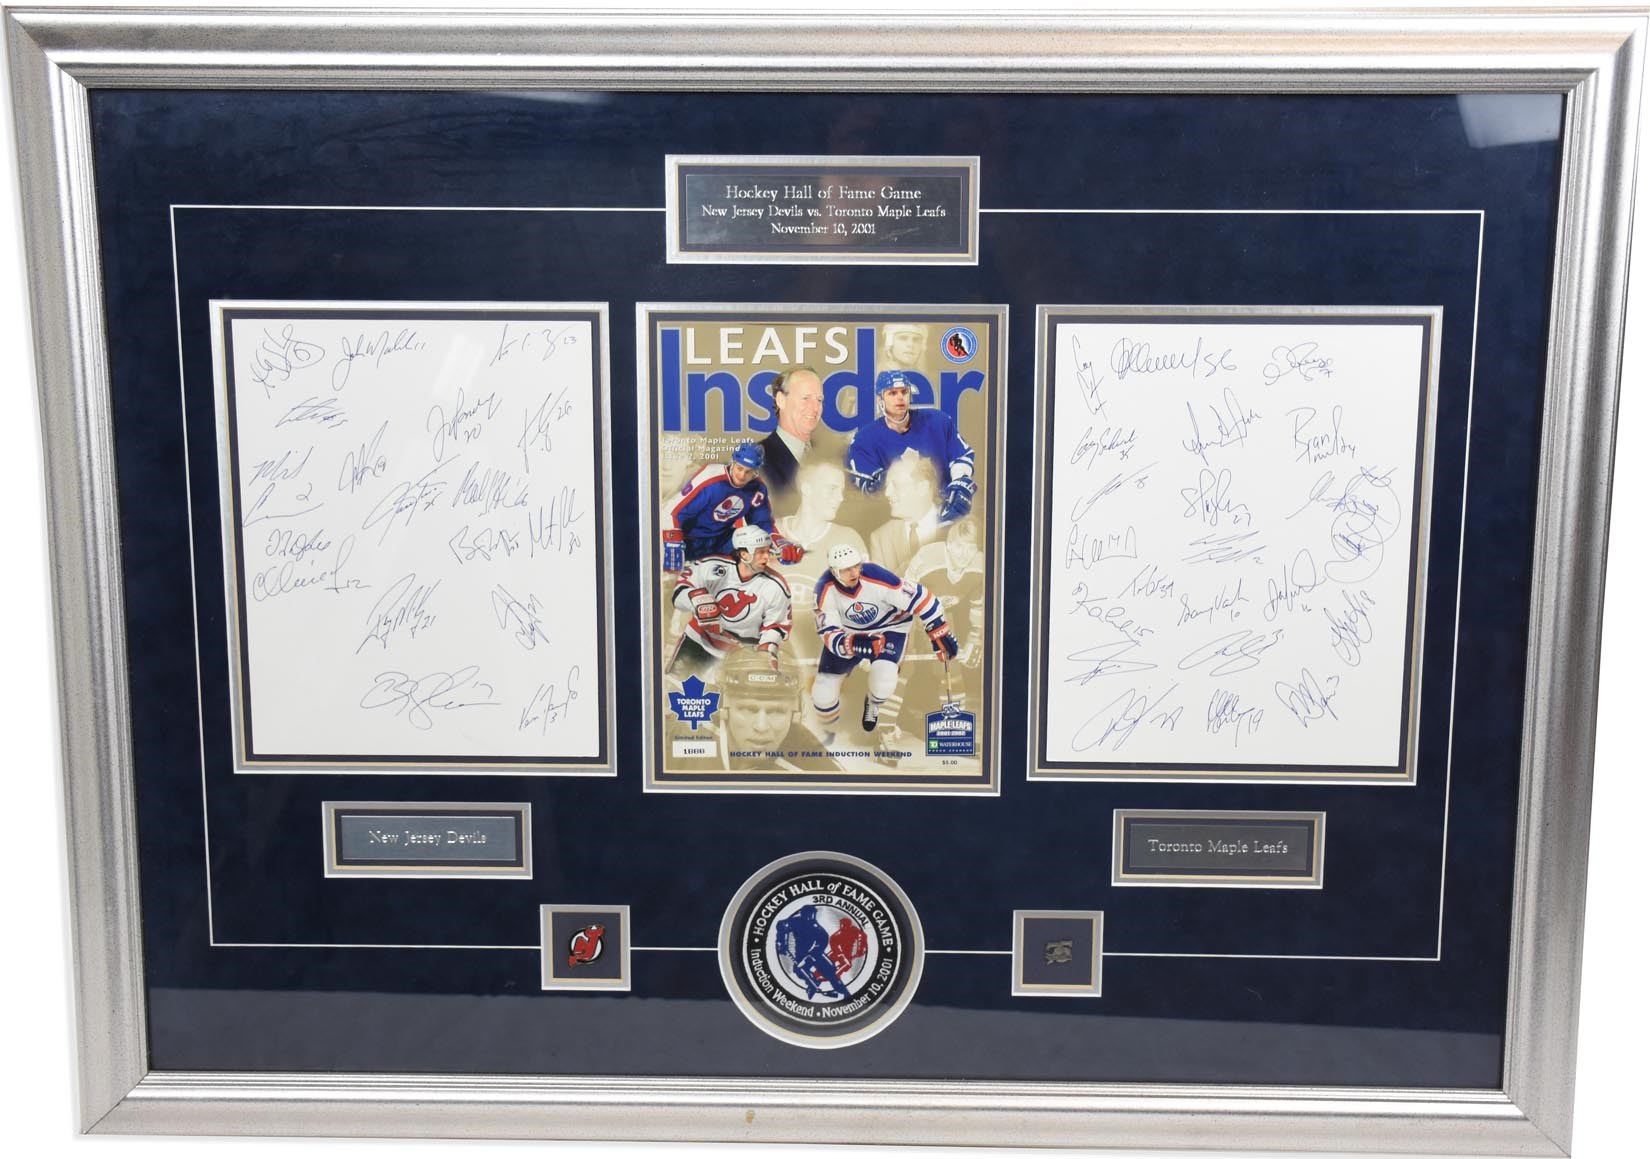 Hockey - 2001 Hockey Hall of Fame Game Signed Display Presented to Craig Patrick